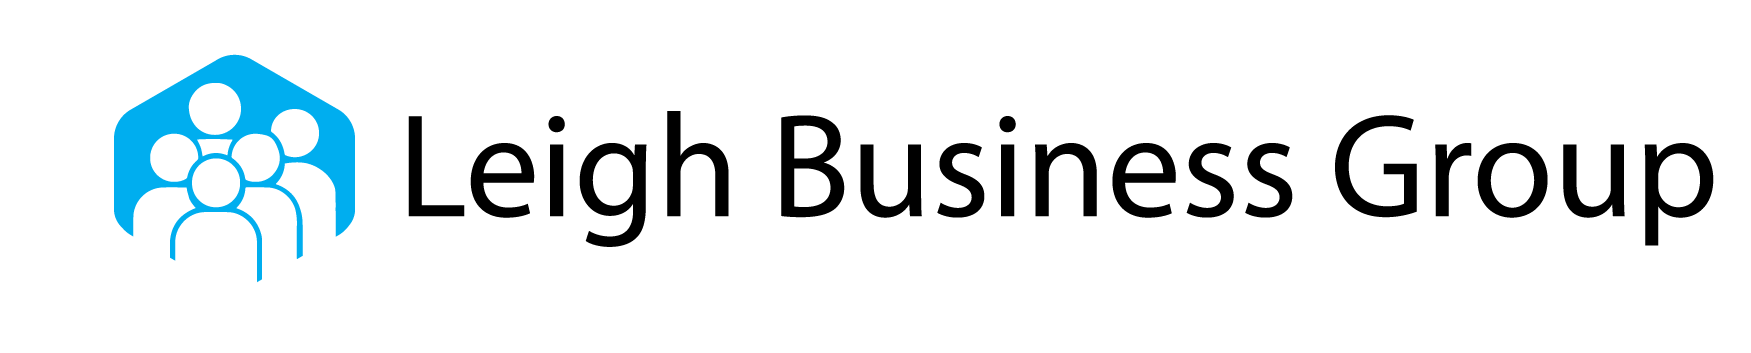 Leigh Business Group logo